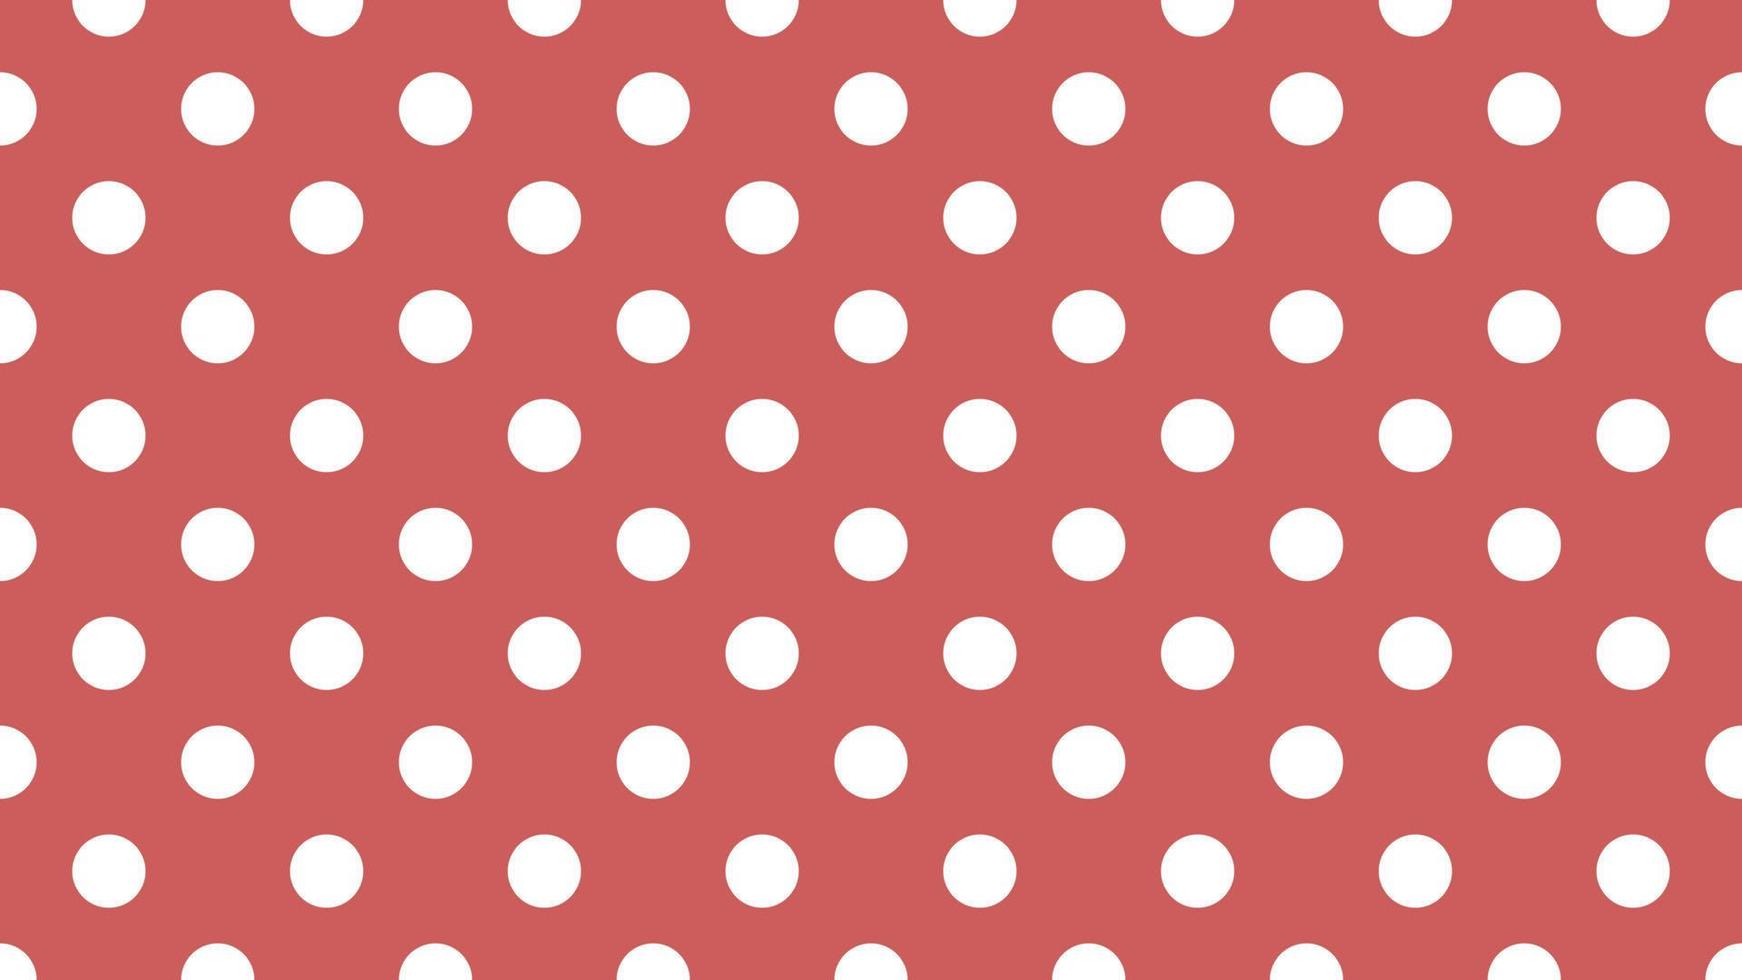 wit kleur polka dots over- Indisch rood achtergrond vector